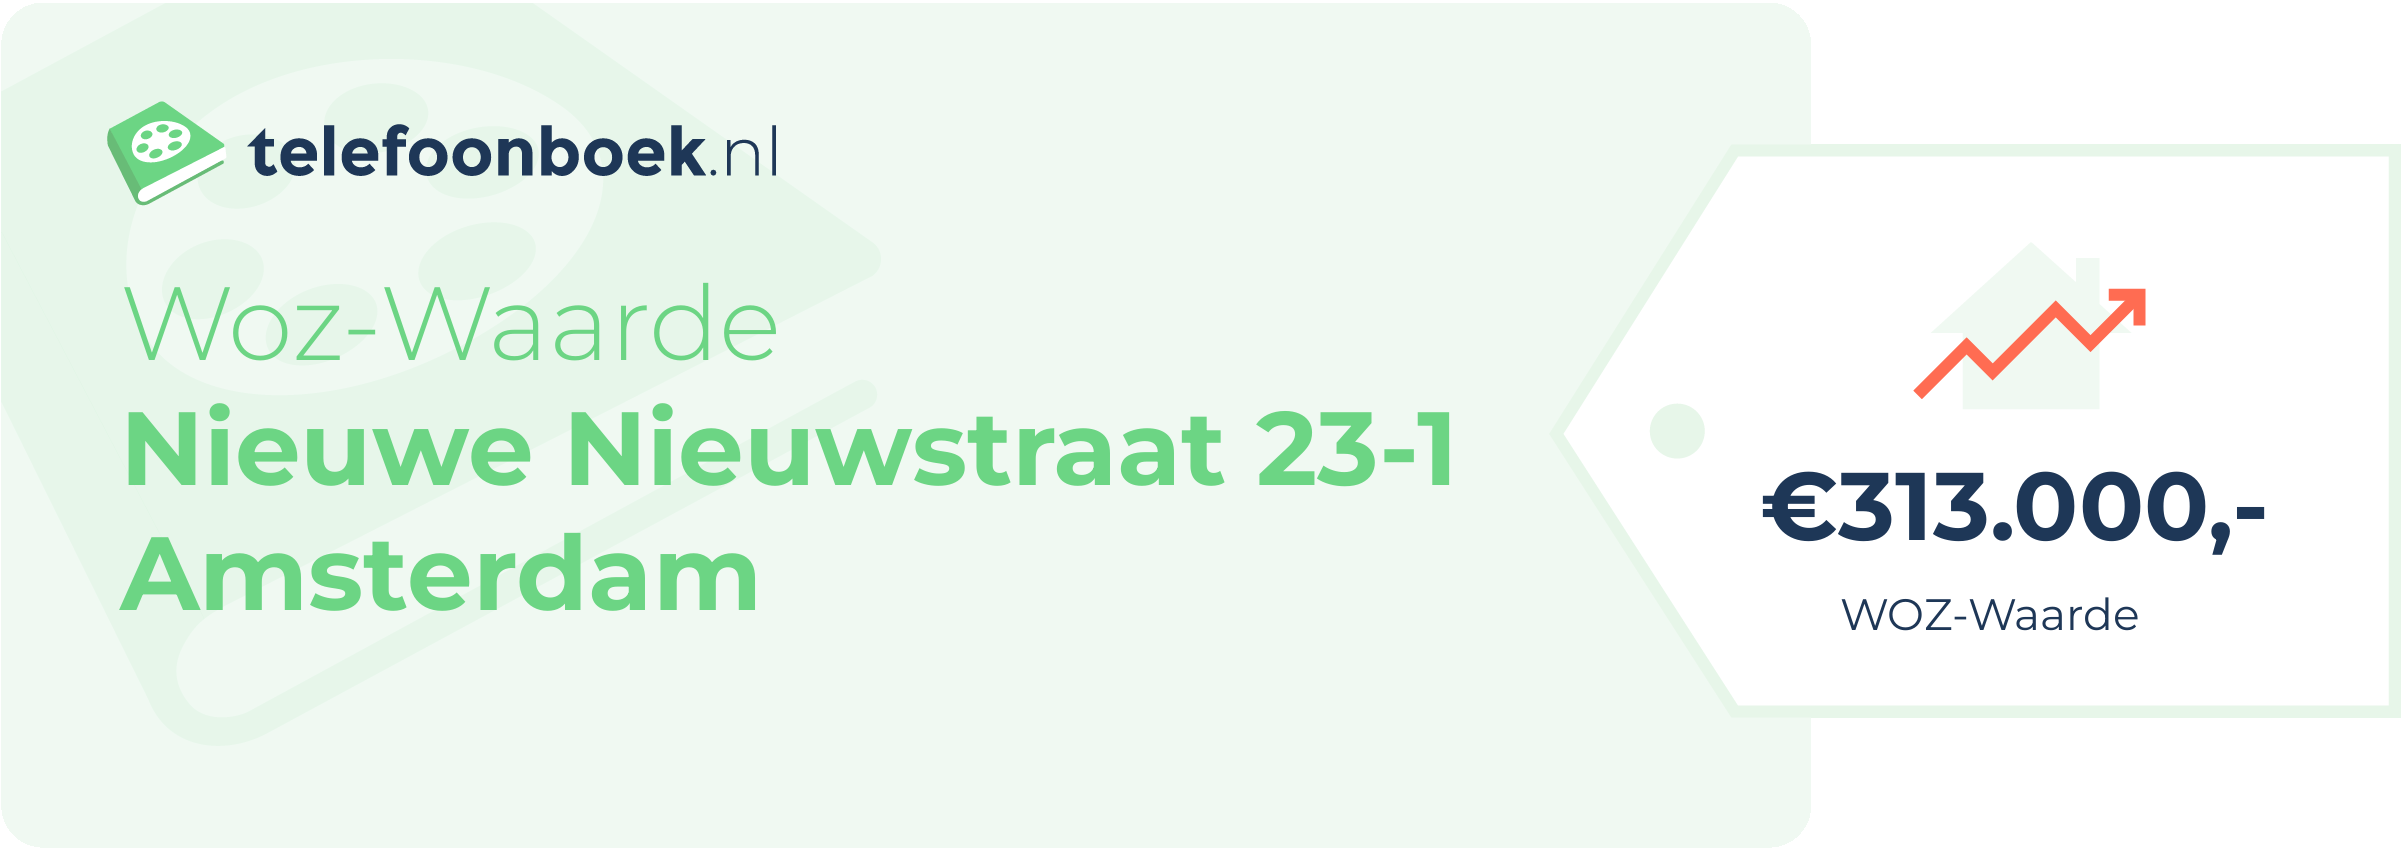 WOZ-waarde Nieuwe Nieuwstraat 23-1 Amsterdam